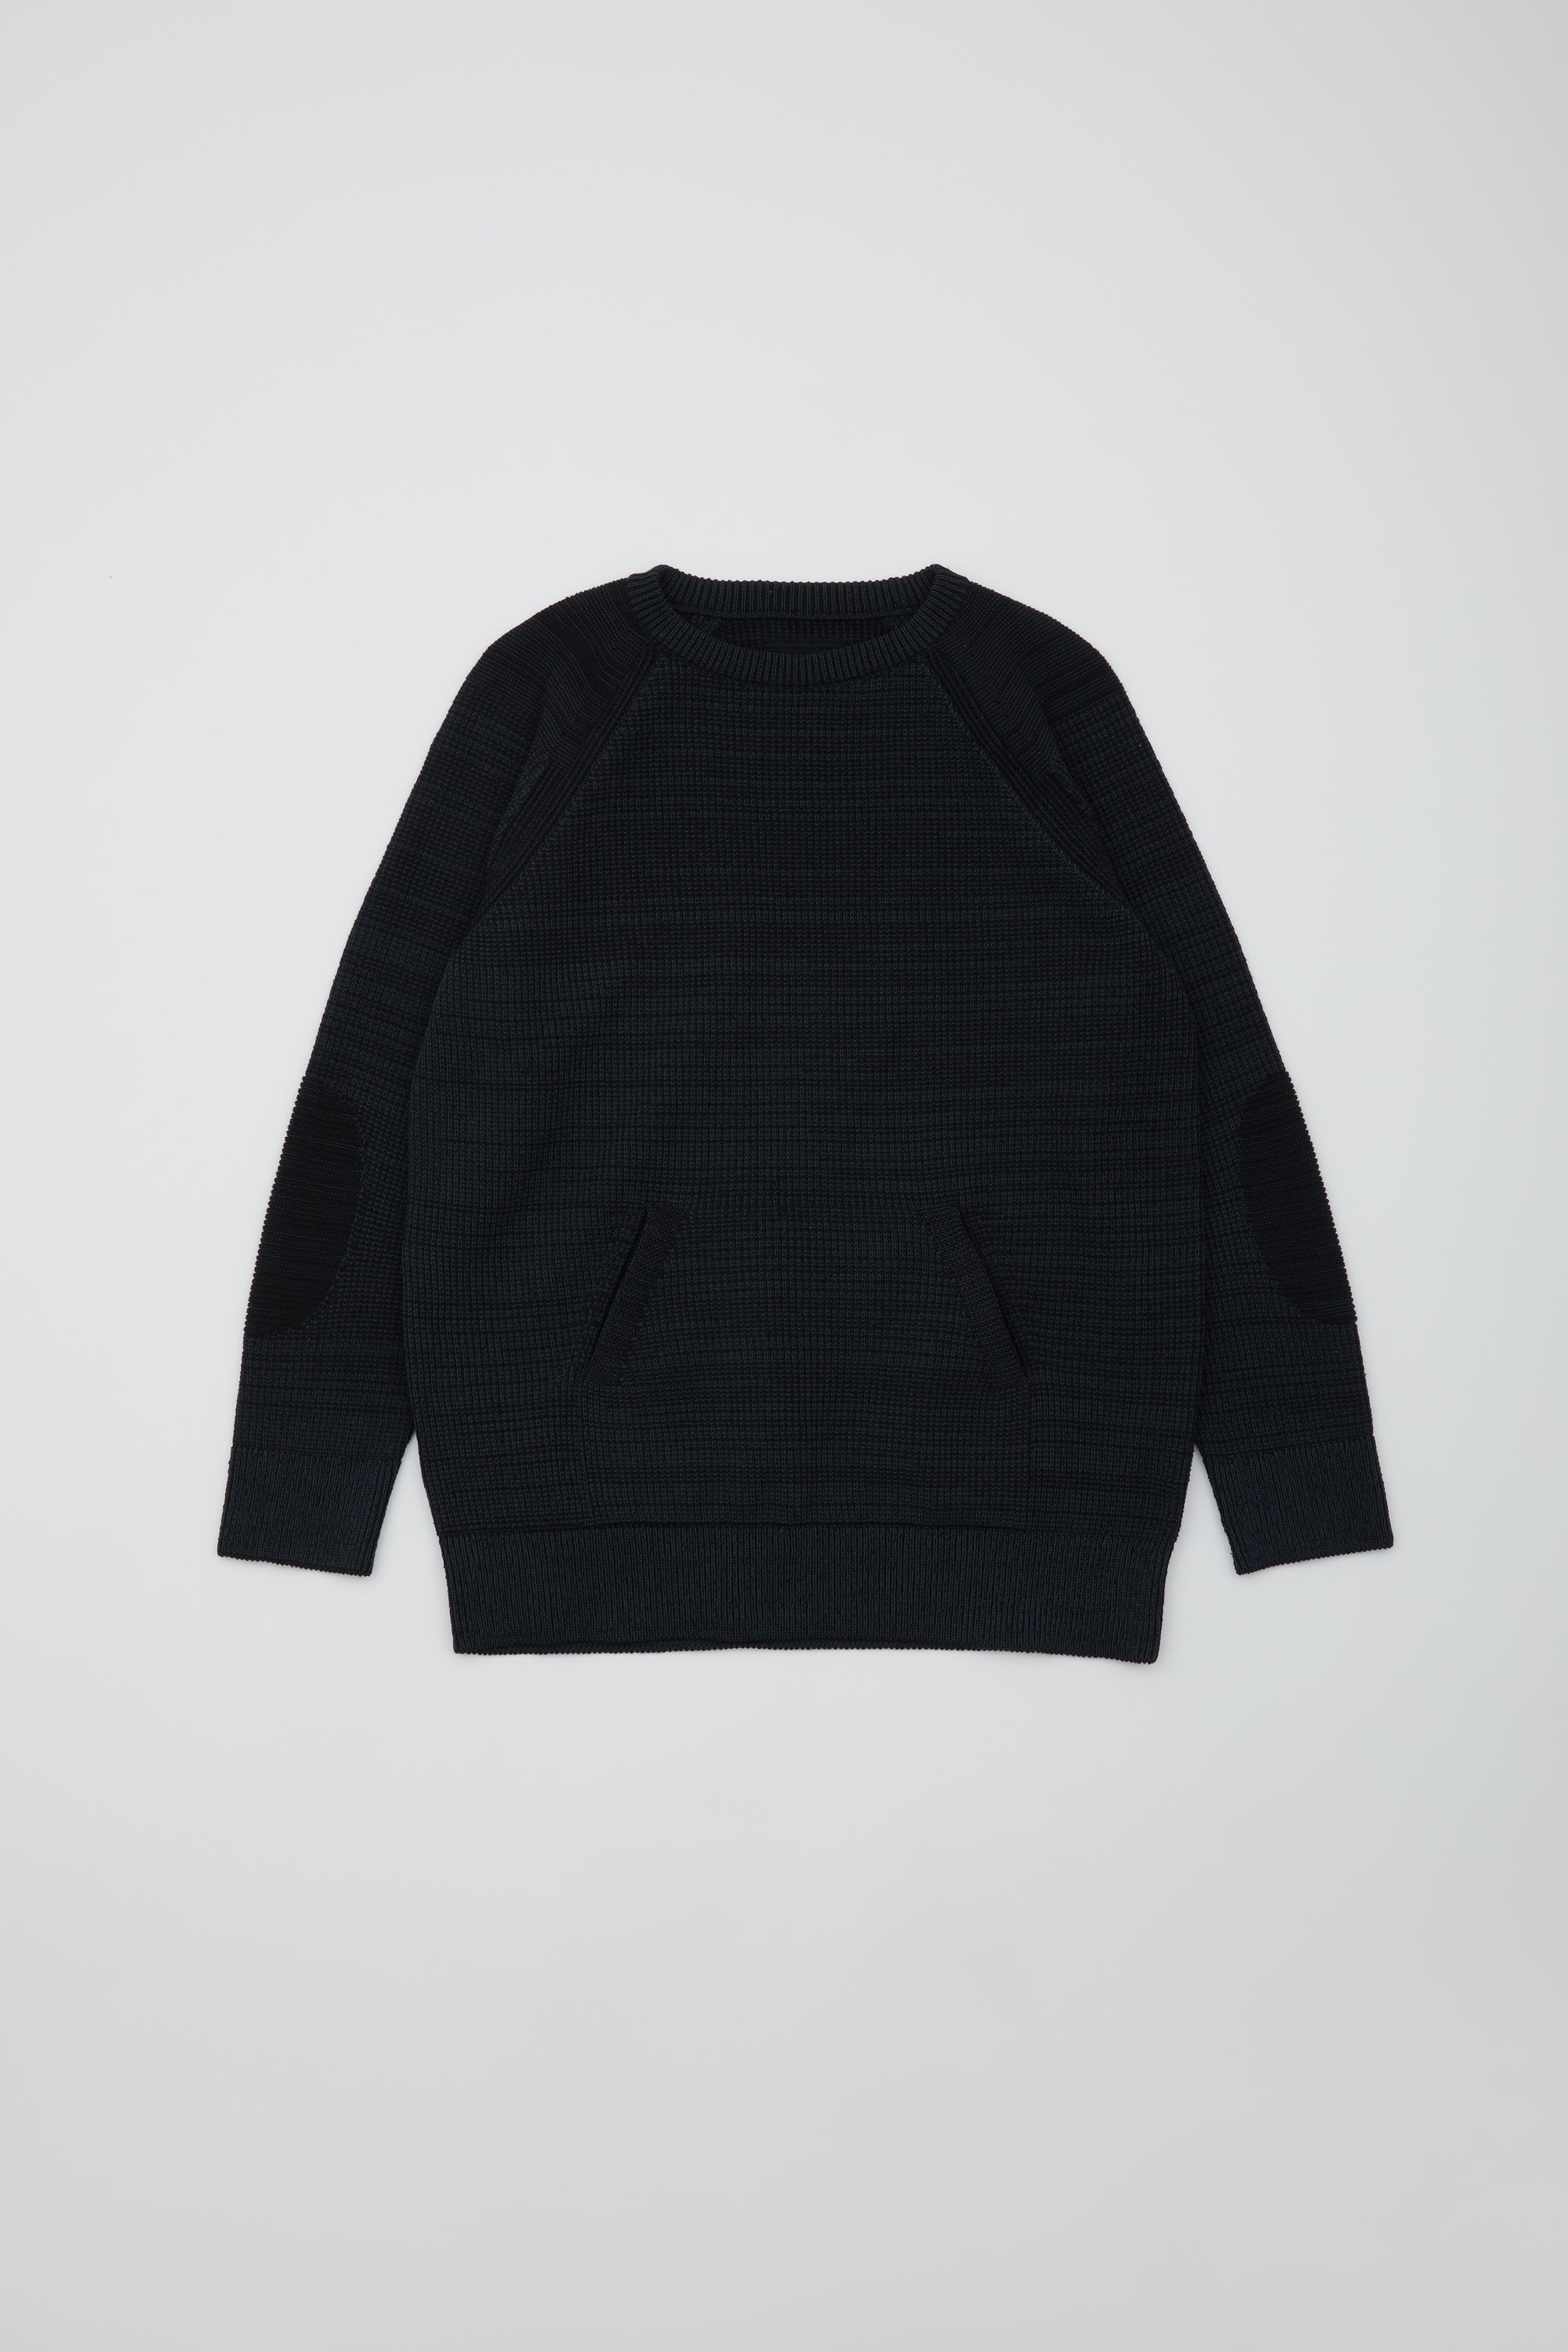 Circular knit sweater